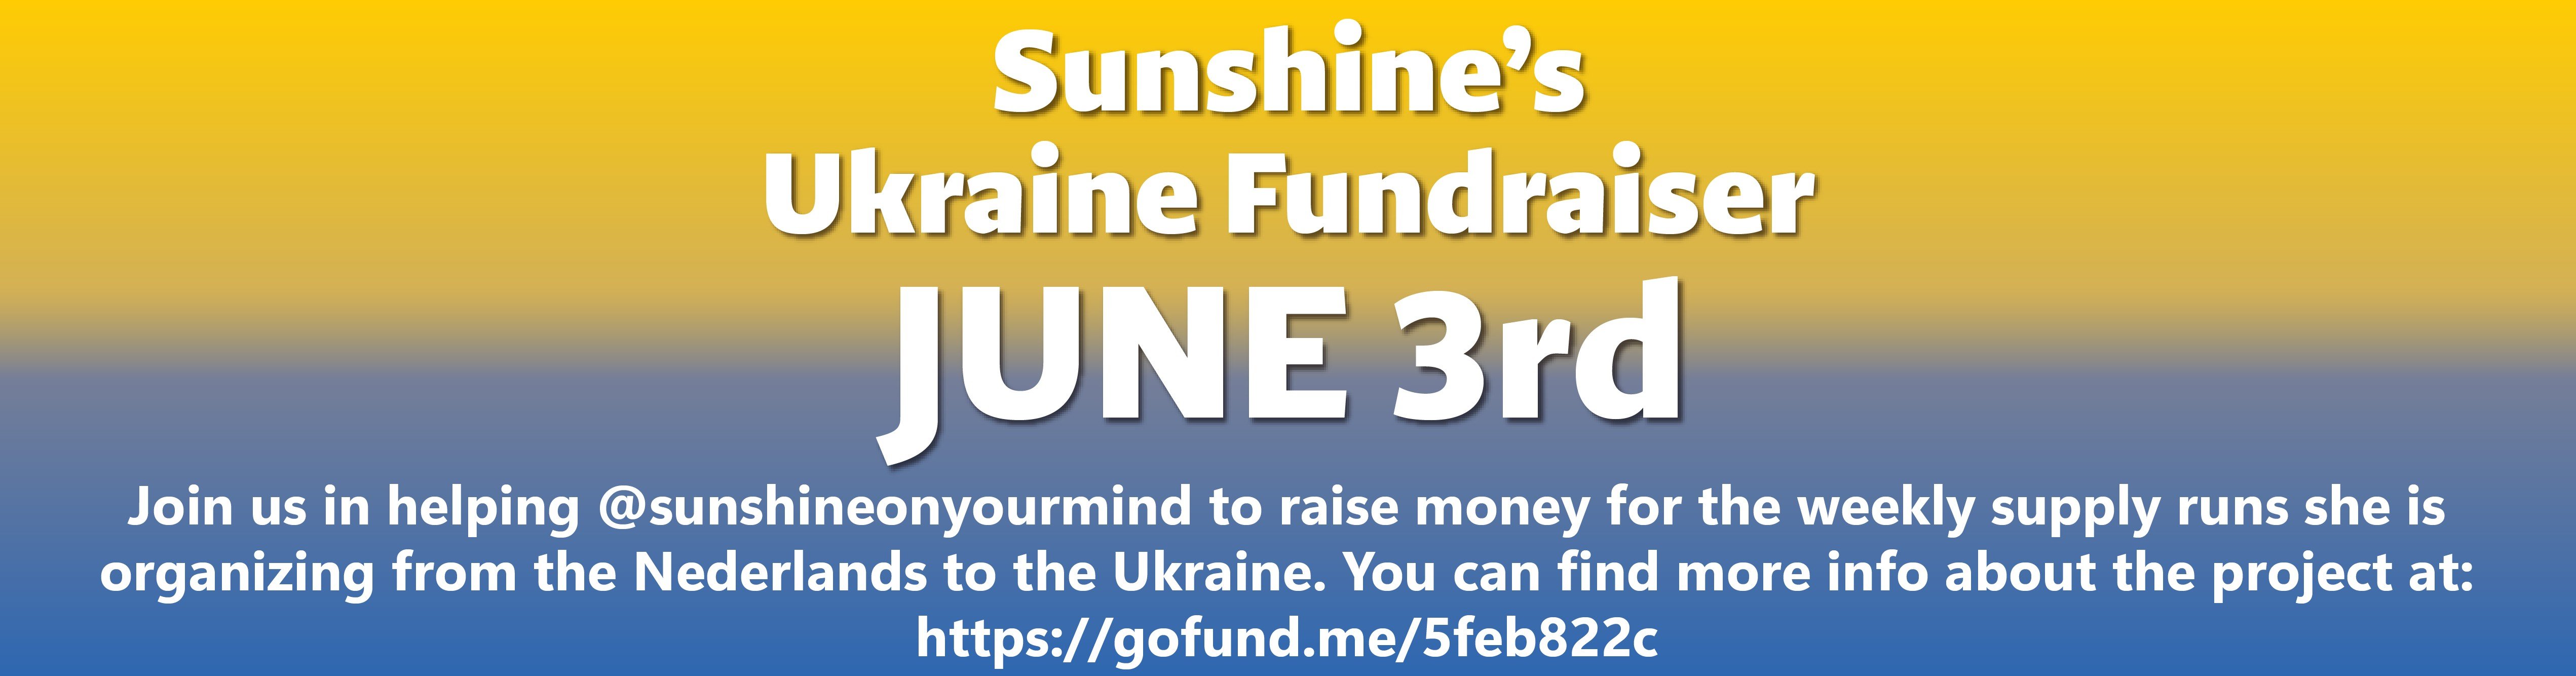 Sunshine's Ukraine Fundraiser